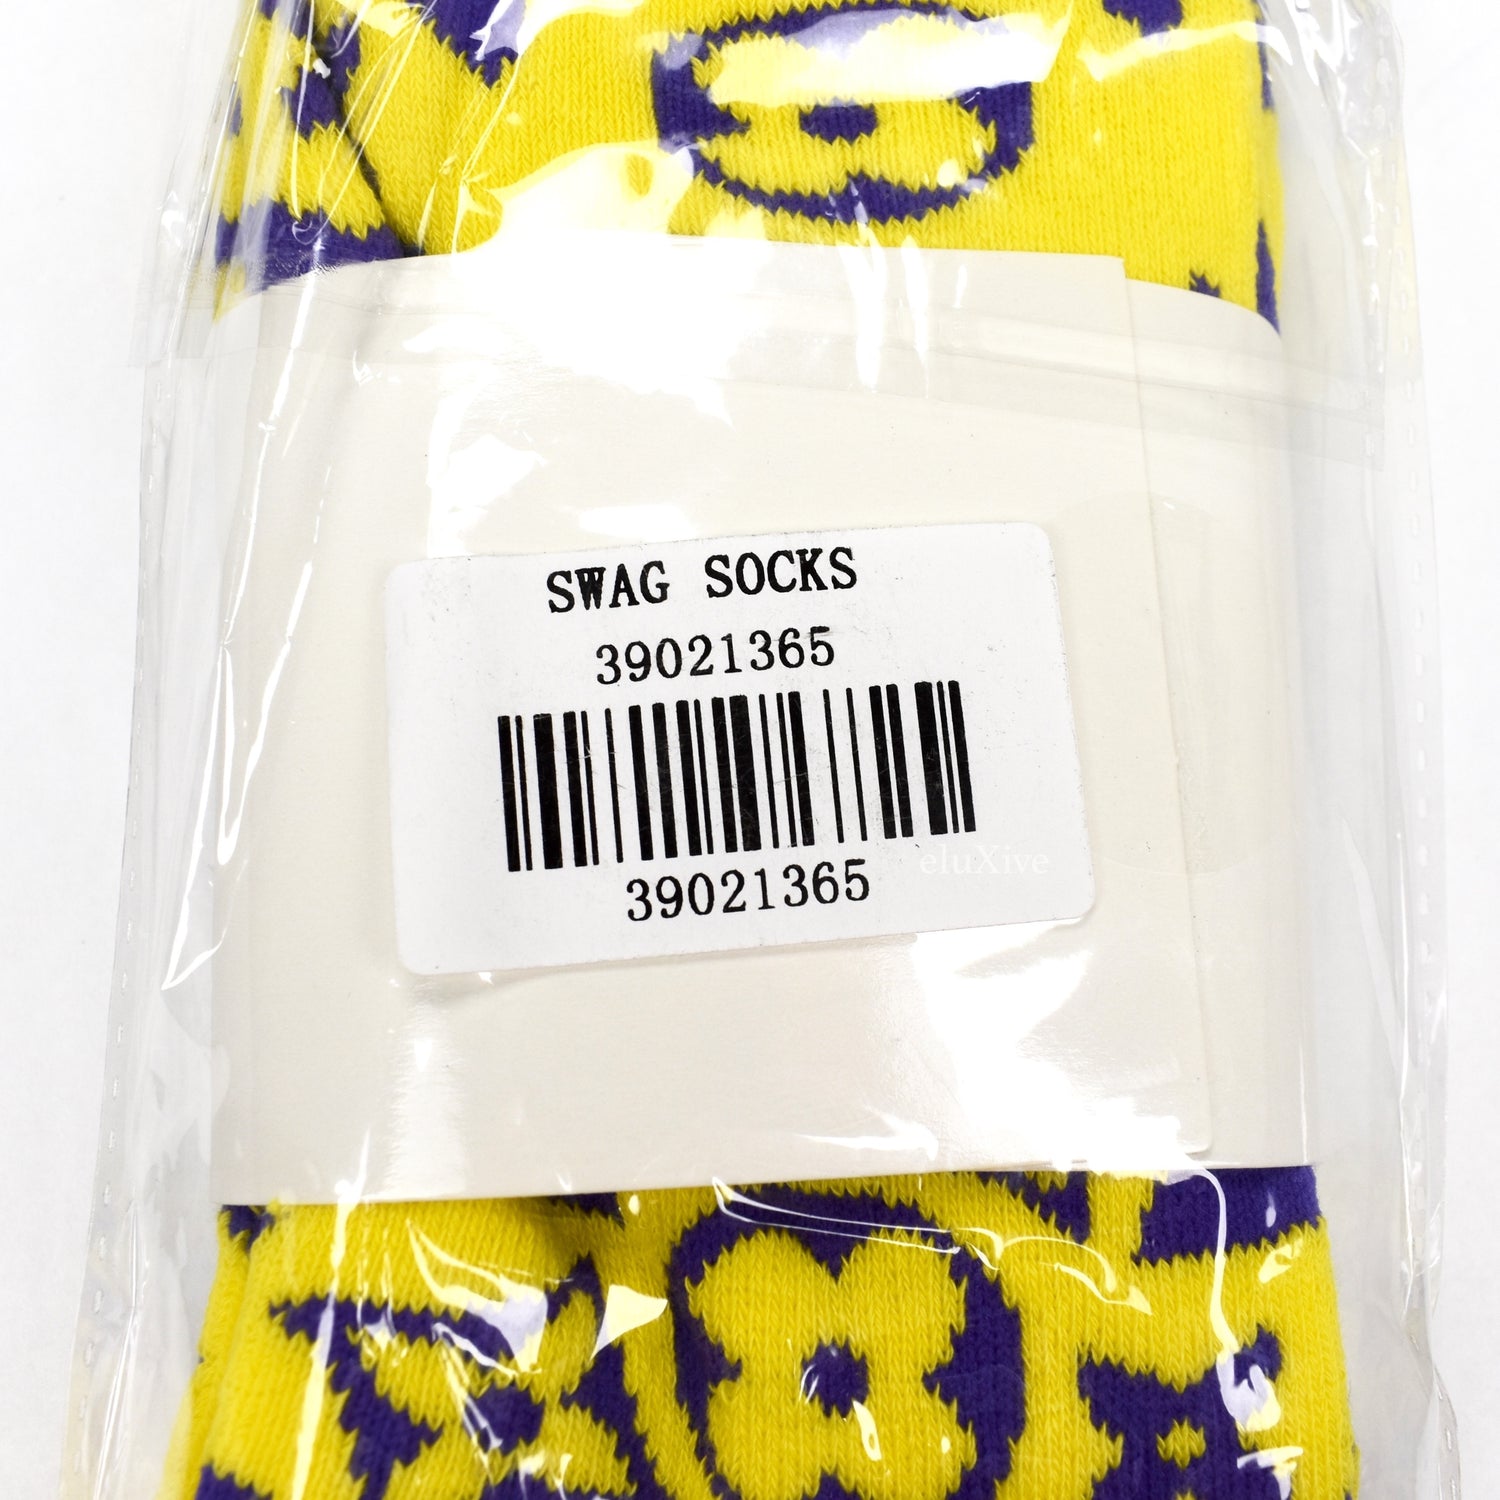 Imran Potato Imran Potato Monogram Gucci white socks